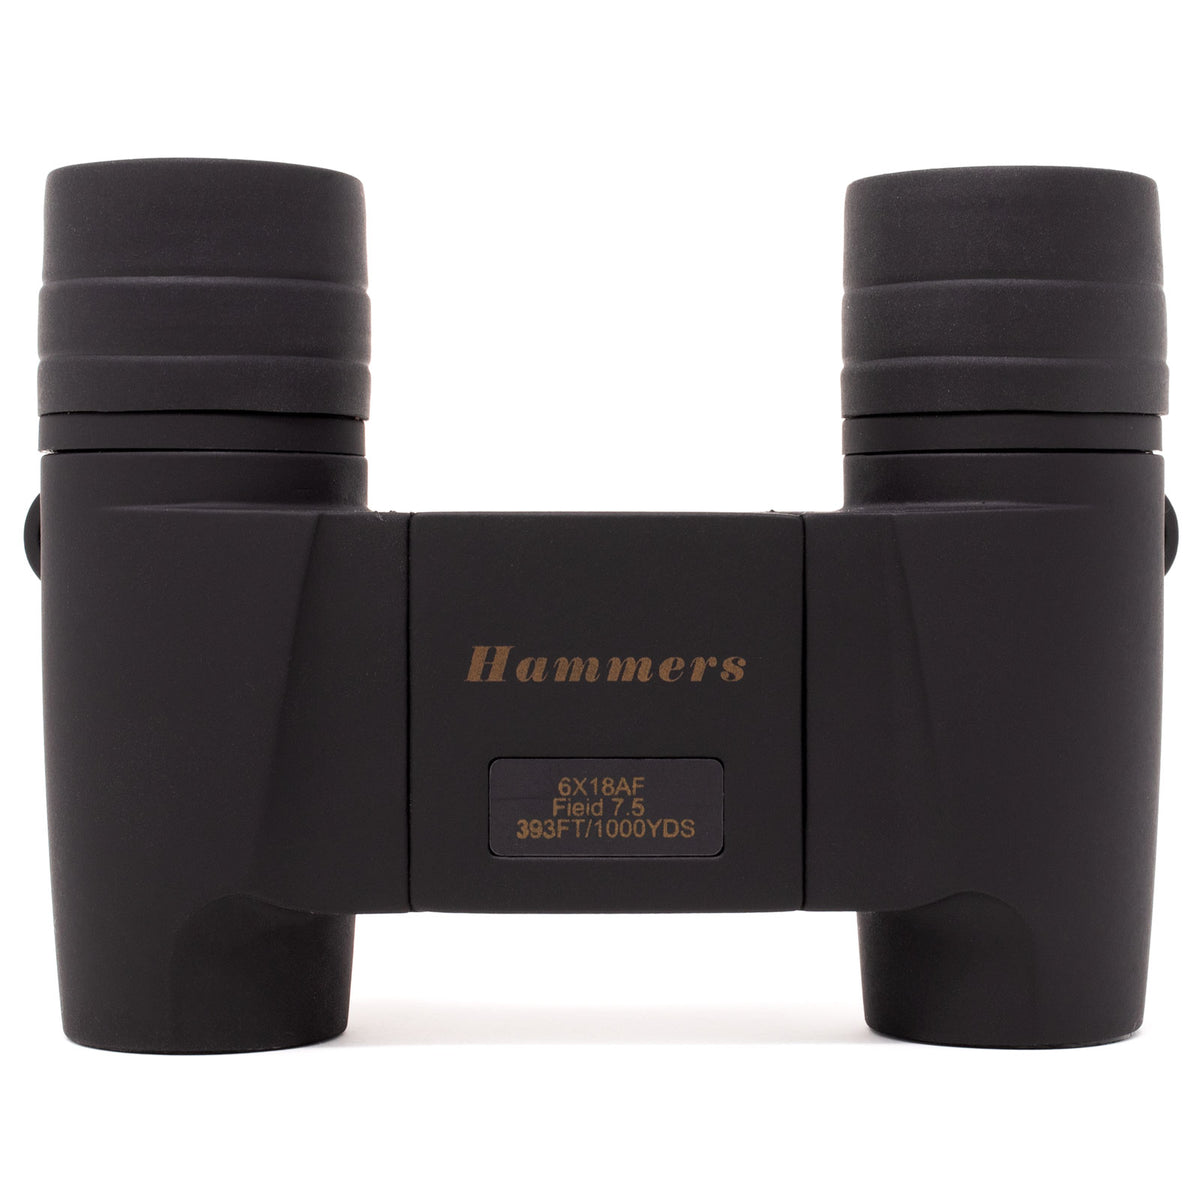 Hammers 6x18 Auto-focus Compact Binoculars